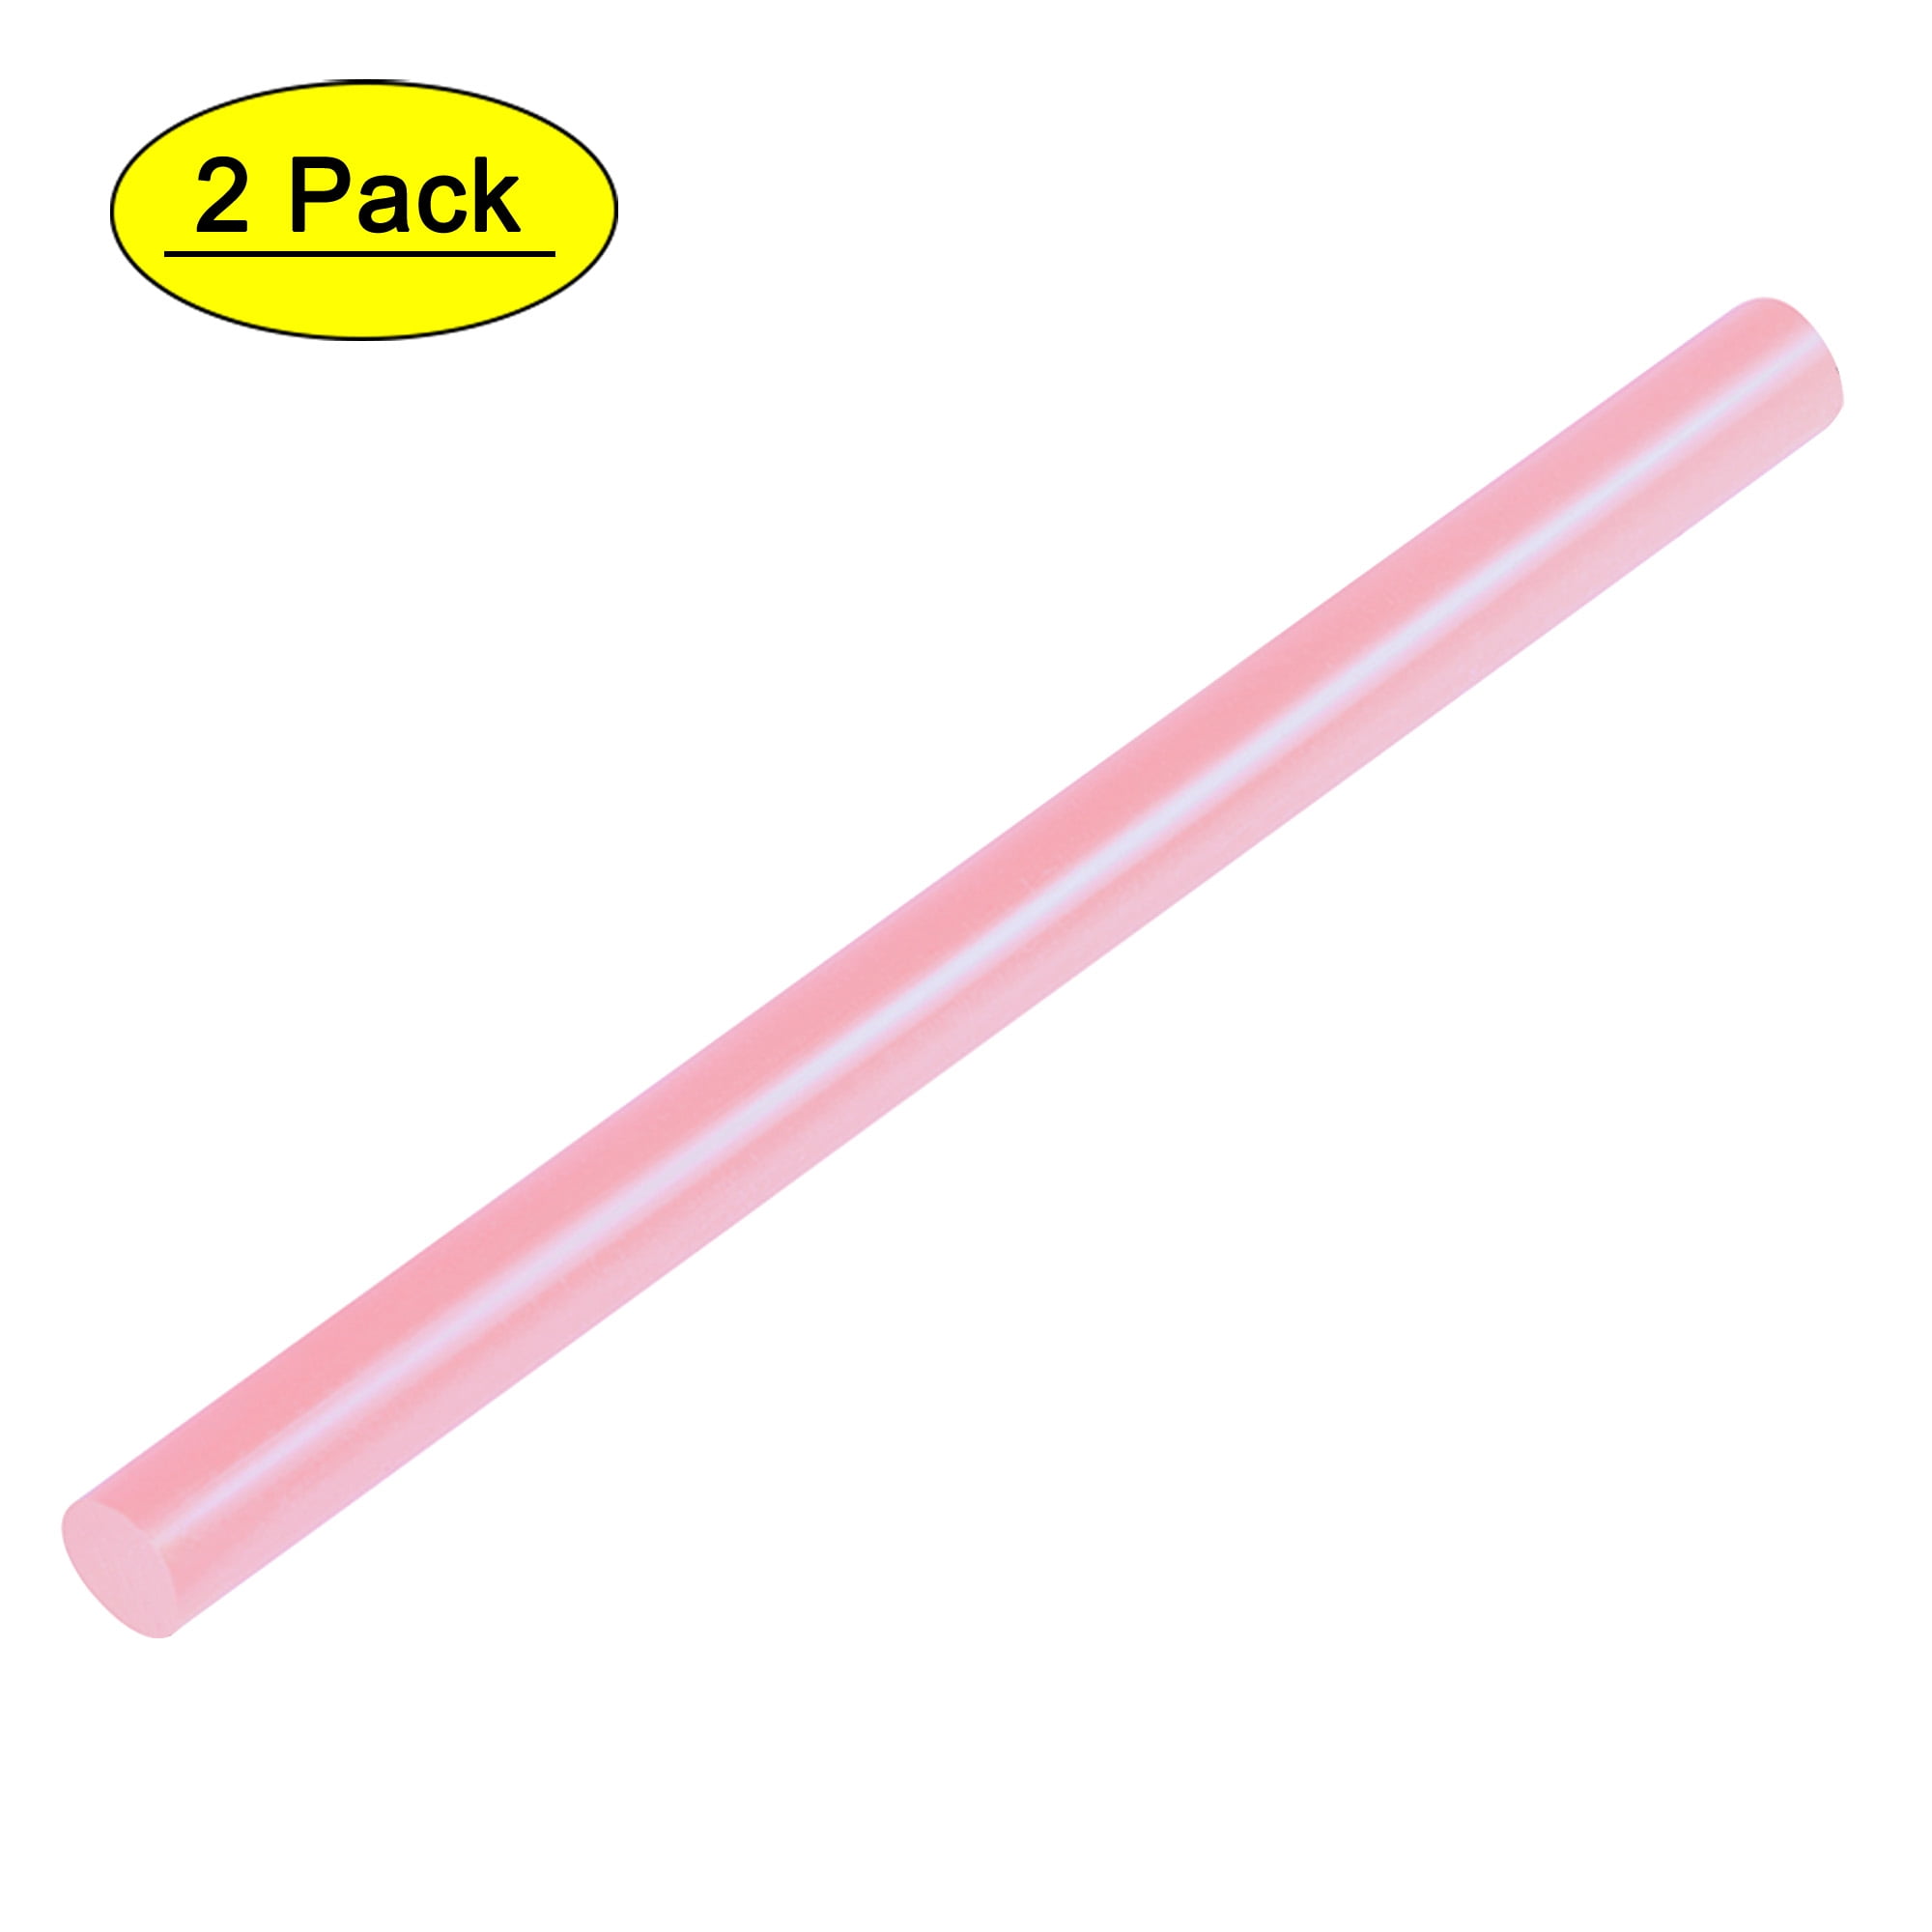 Mini Hot Melt Glue Sticks: Pack of 10 From 0.50 GBP